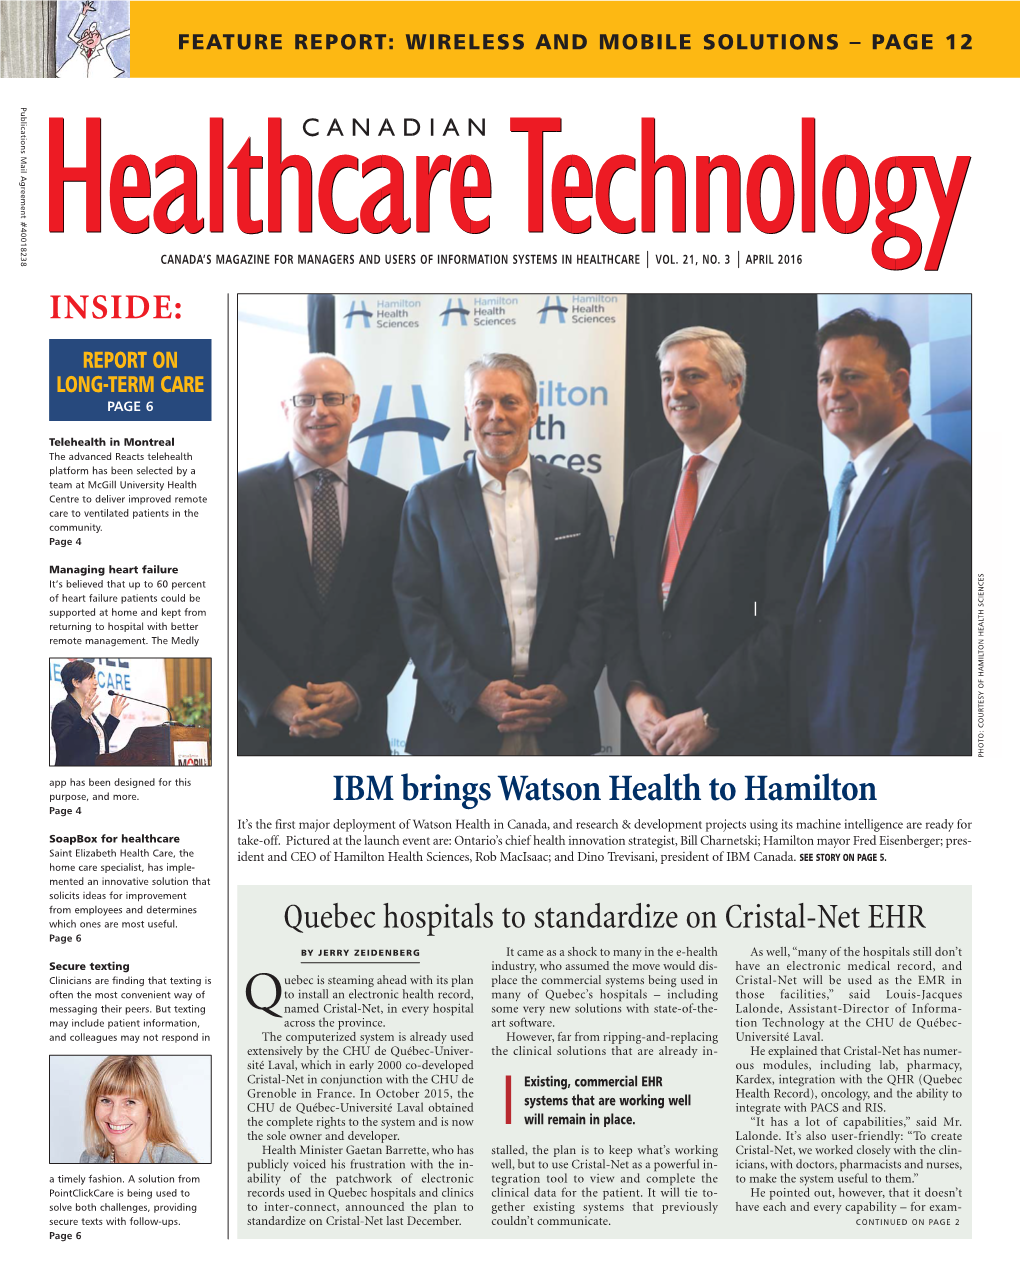 IBM Brings Watson Health to Hamilton